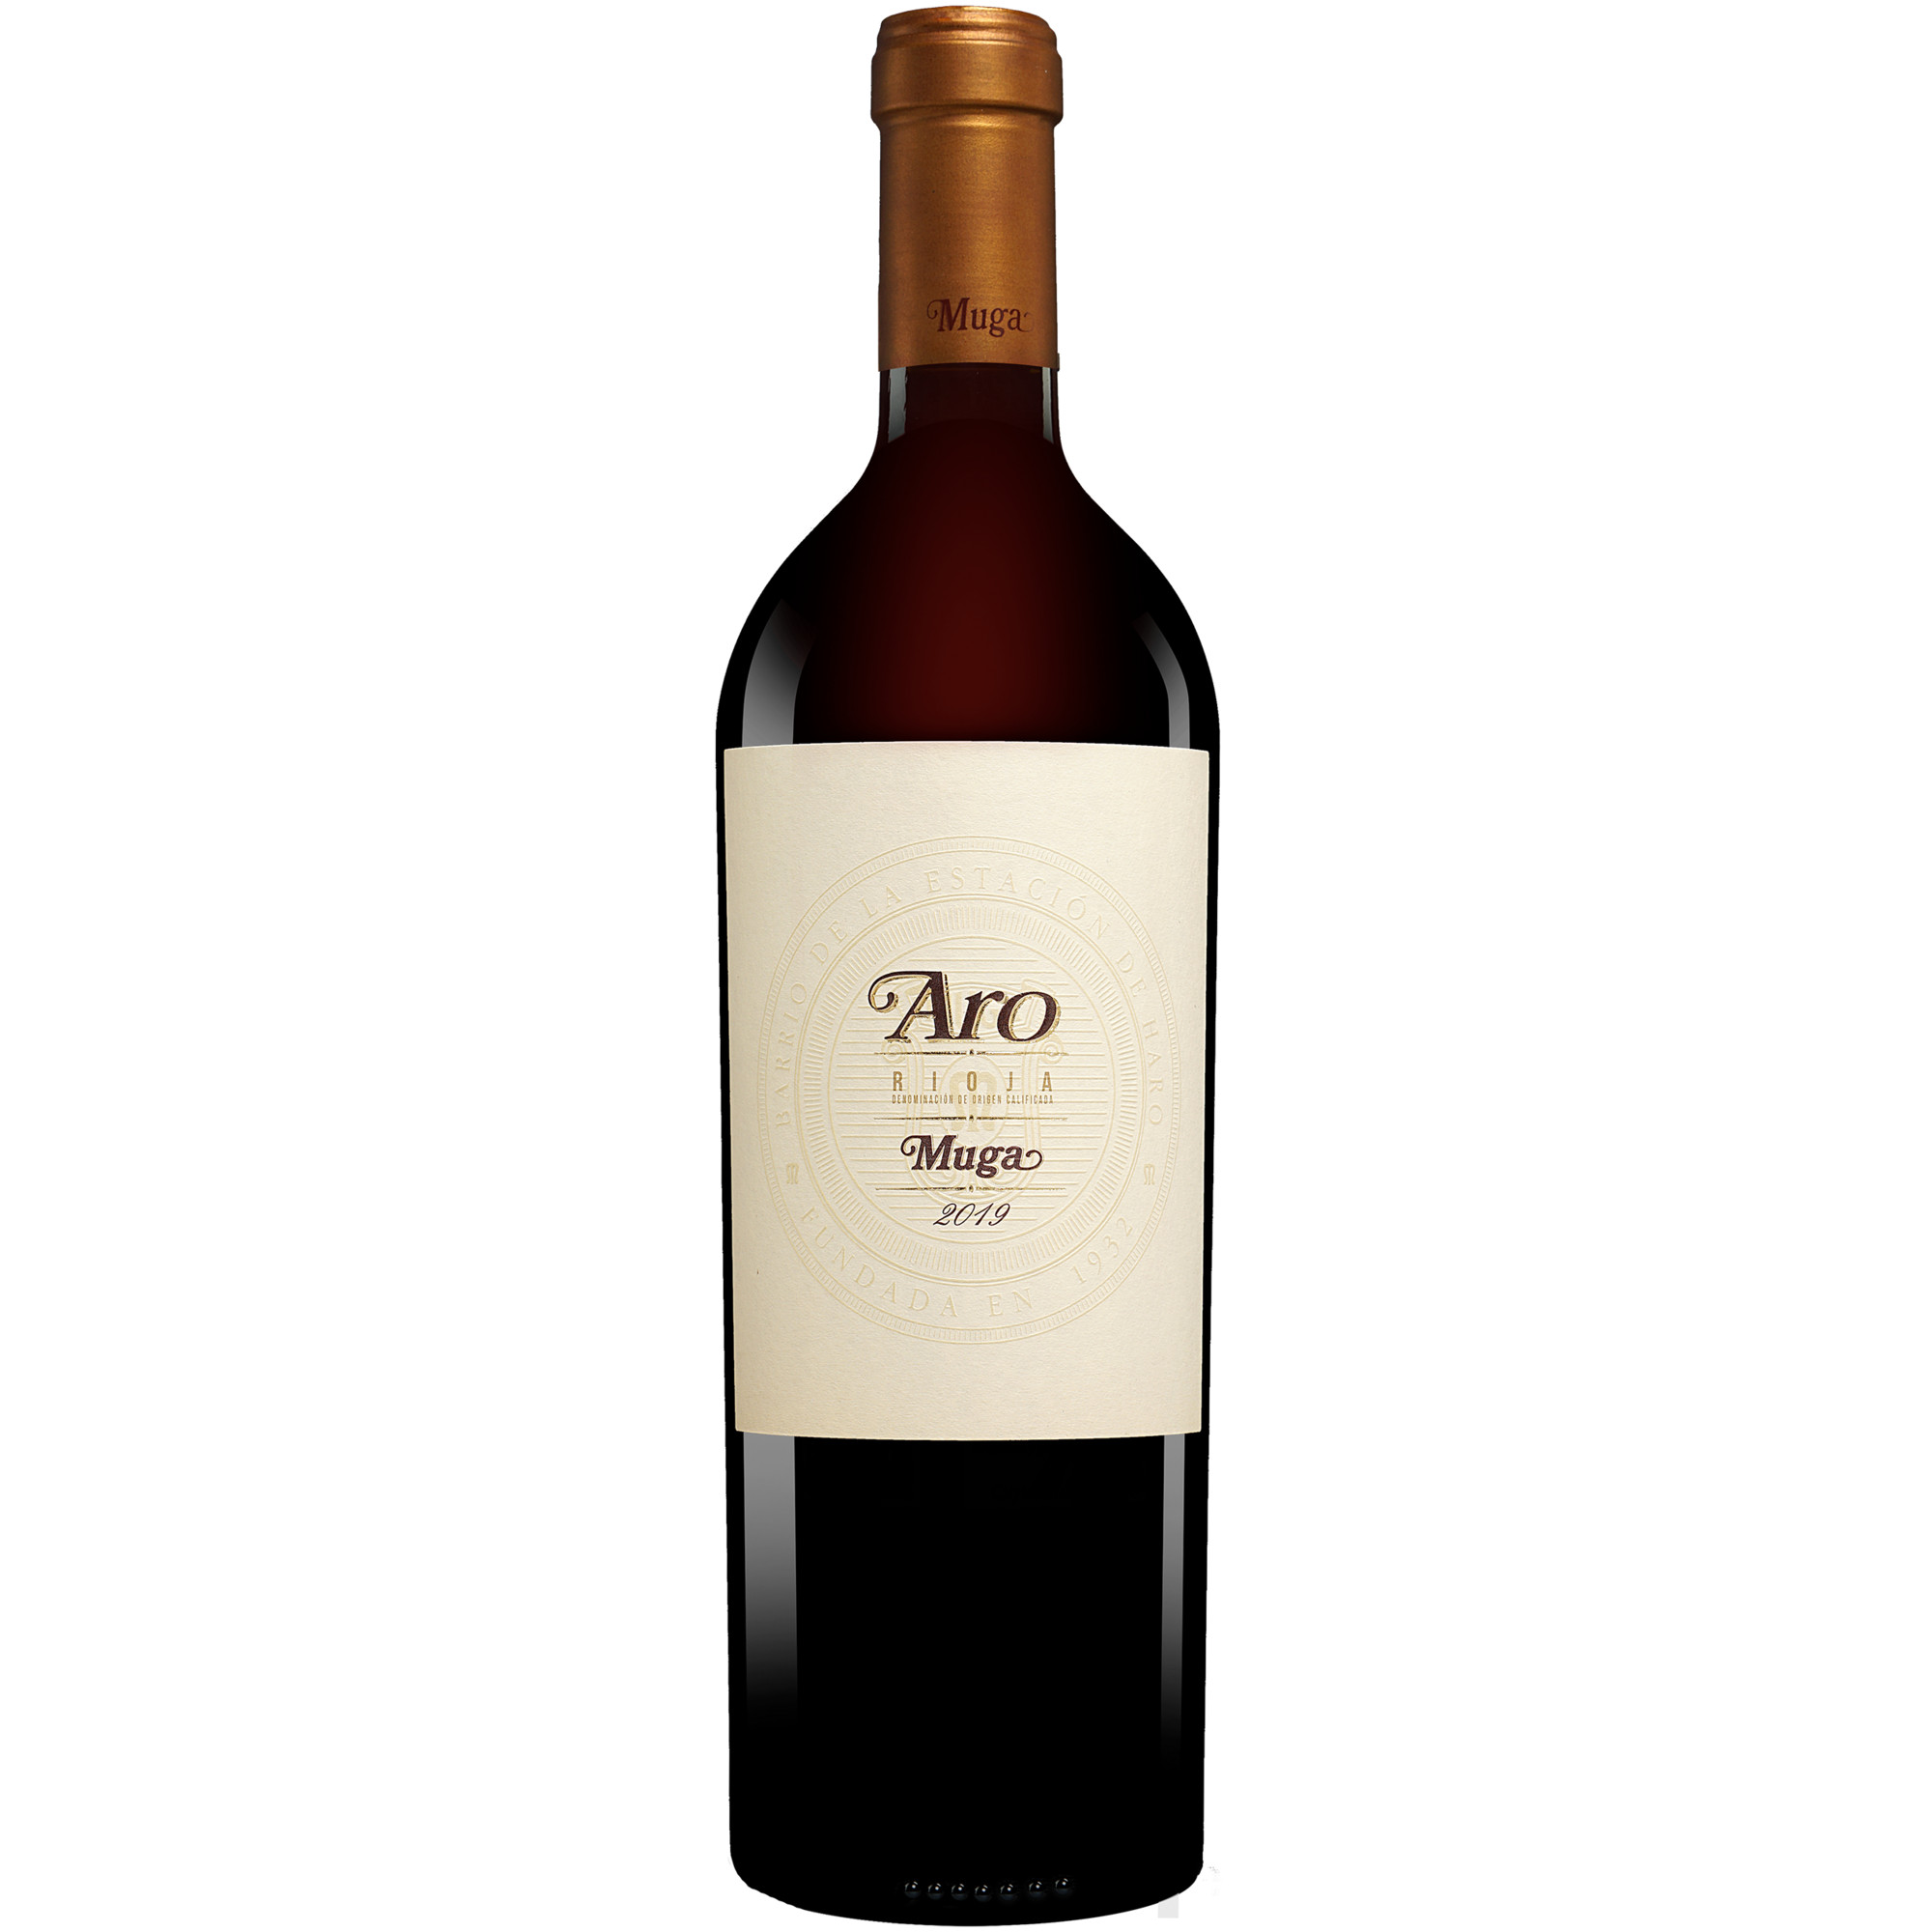 Muga »Aro« 2019  014.5% Vol. Rotwein Trocken aus Spanien